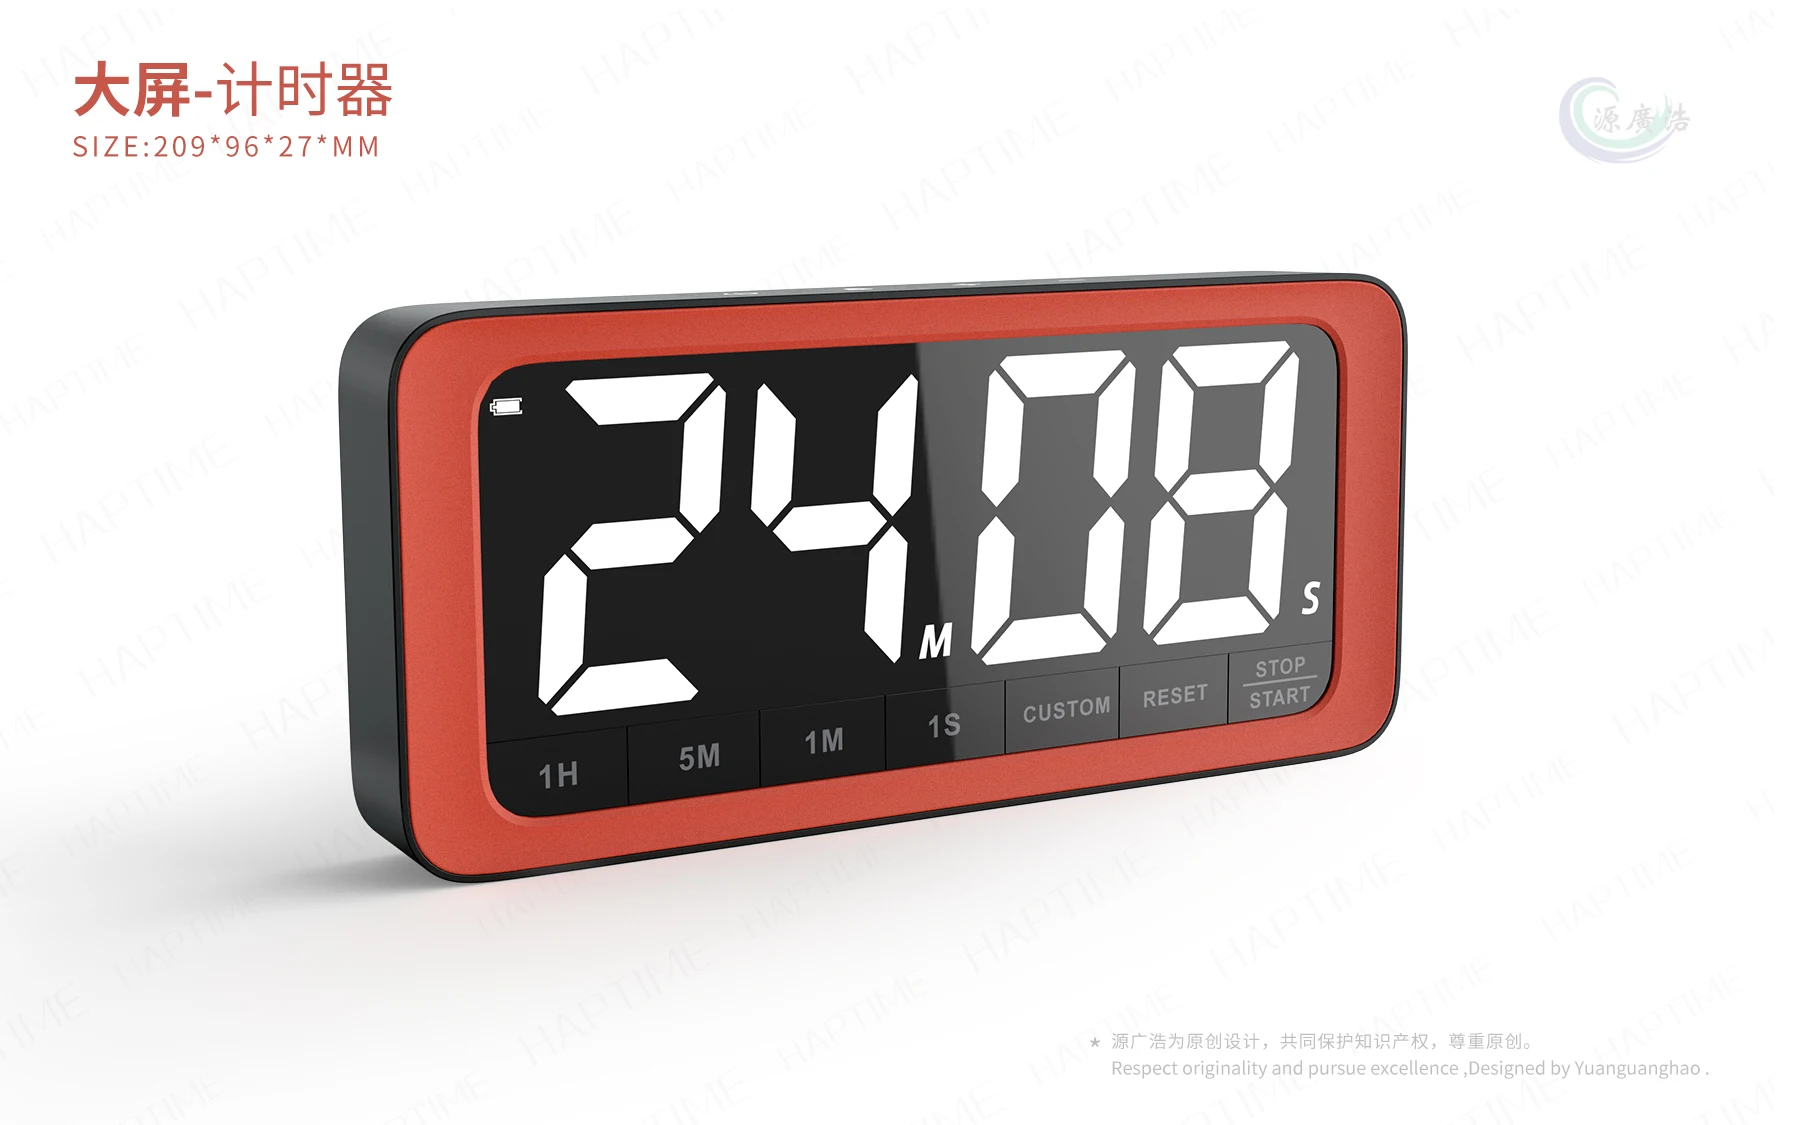 https://ae01.alicdn.com/kf/S64b1400535a64a20b0969174a0bb6f66R/Portable-Magnetic-Timer-LED-Large-Display-Digital-Kitchen-Timer-Countdown-Timer-Home-Cooking-Classroom-Gym-Workout.jpg